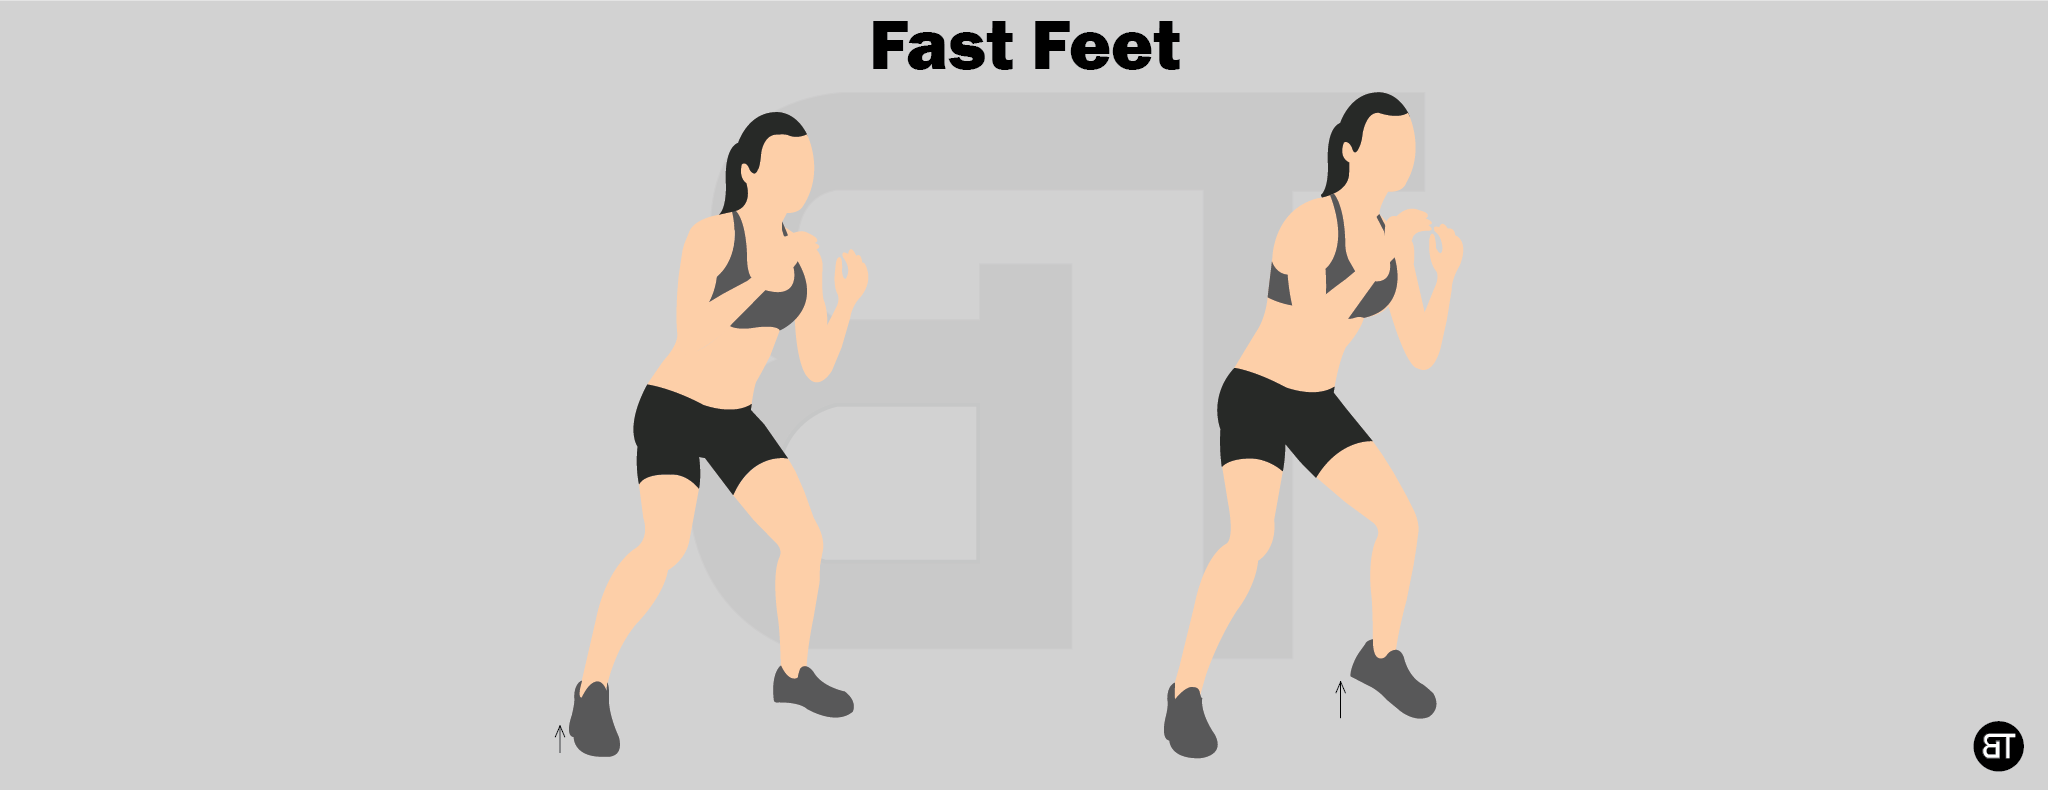 Fast feet